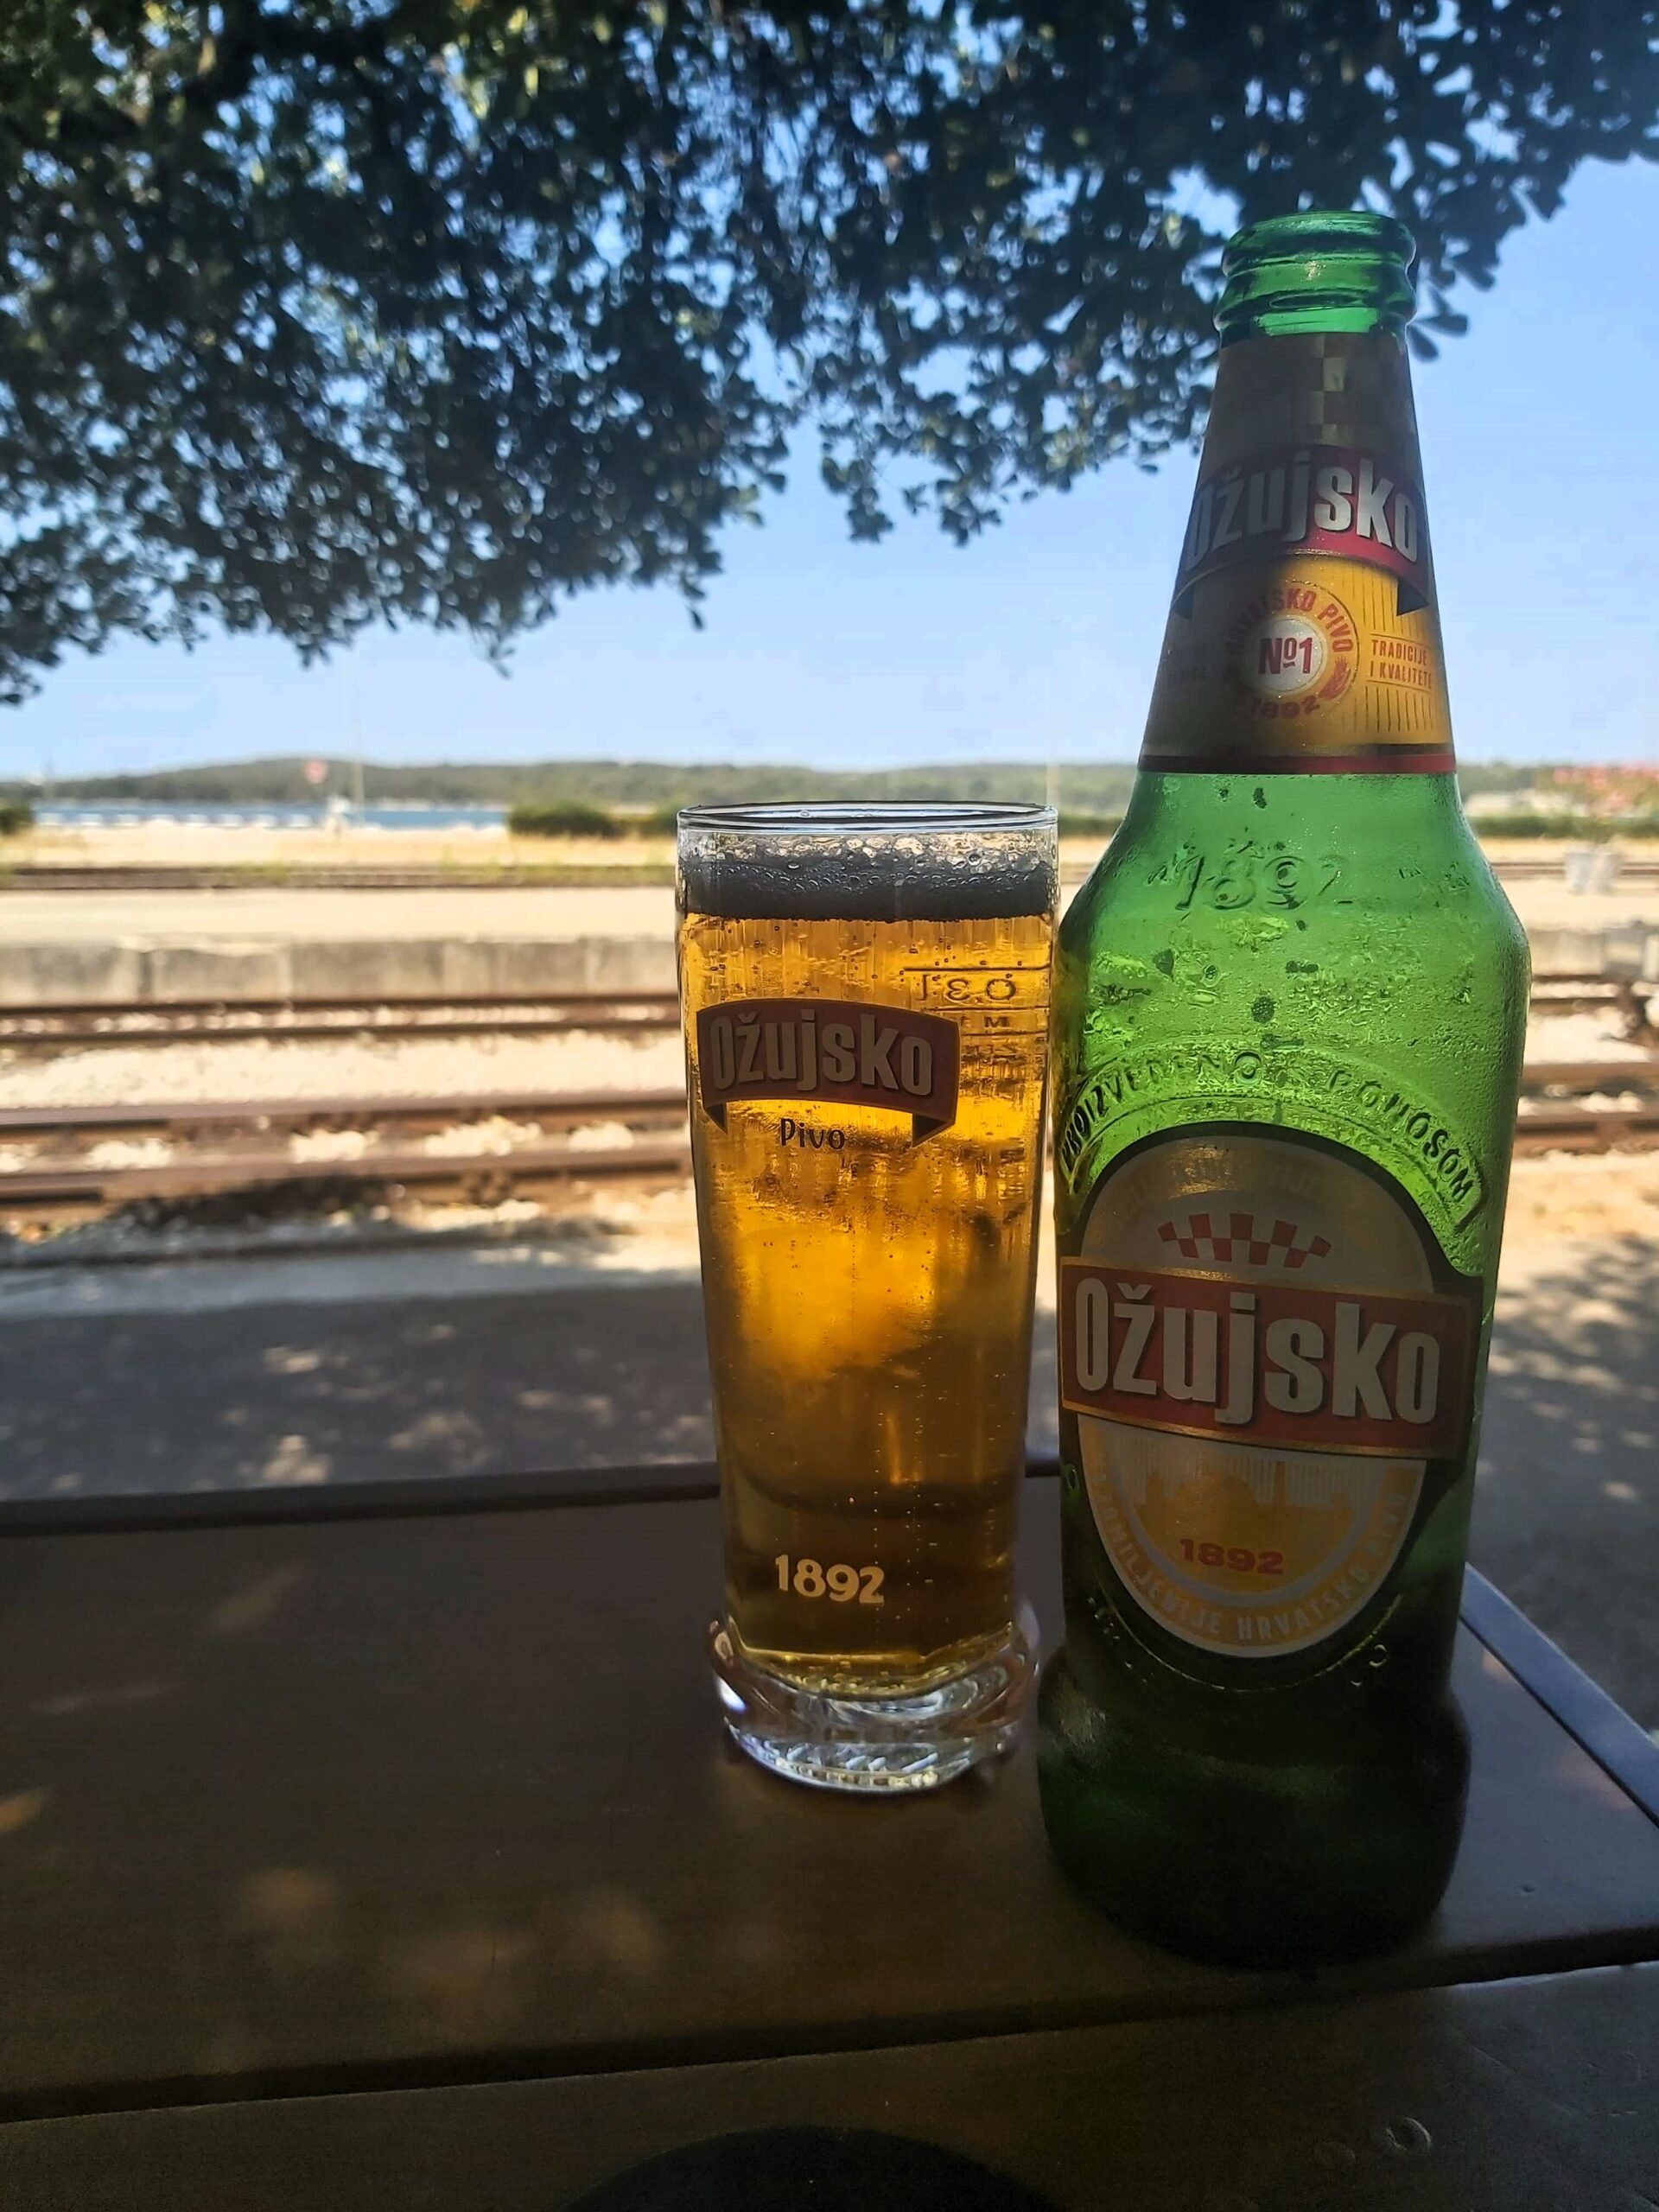 Ozujsko beer with Pula train station platform in background, Croatia